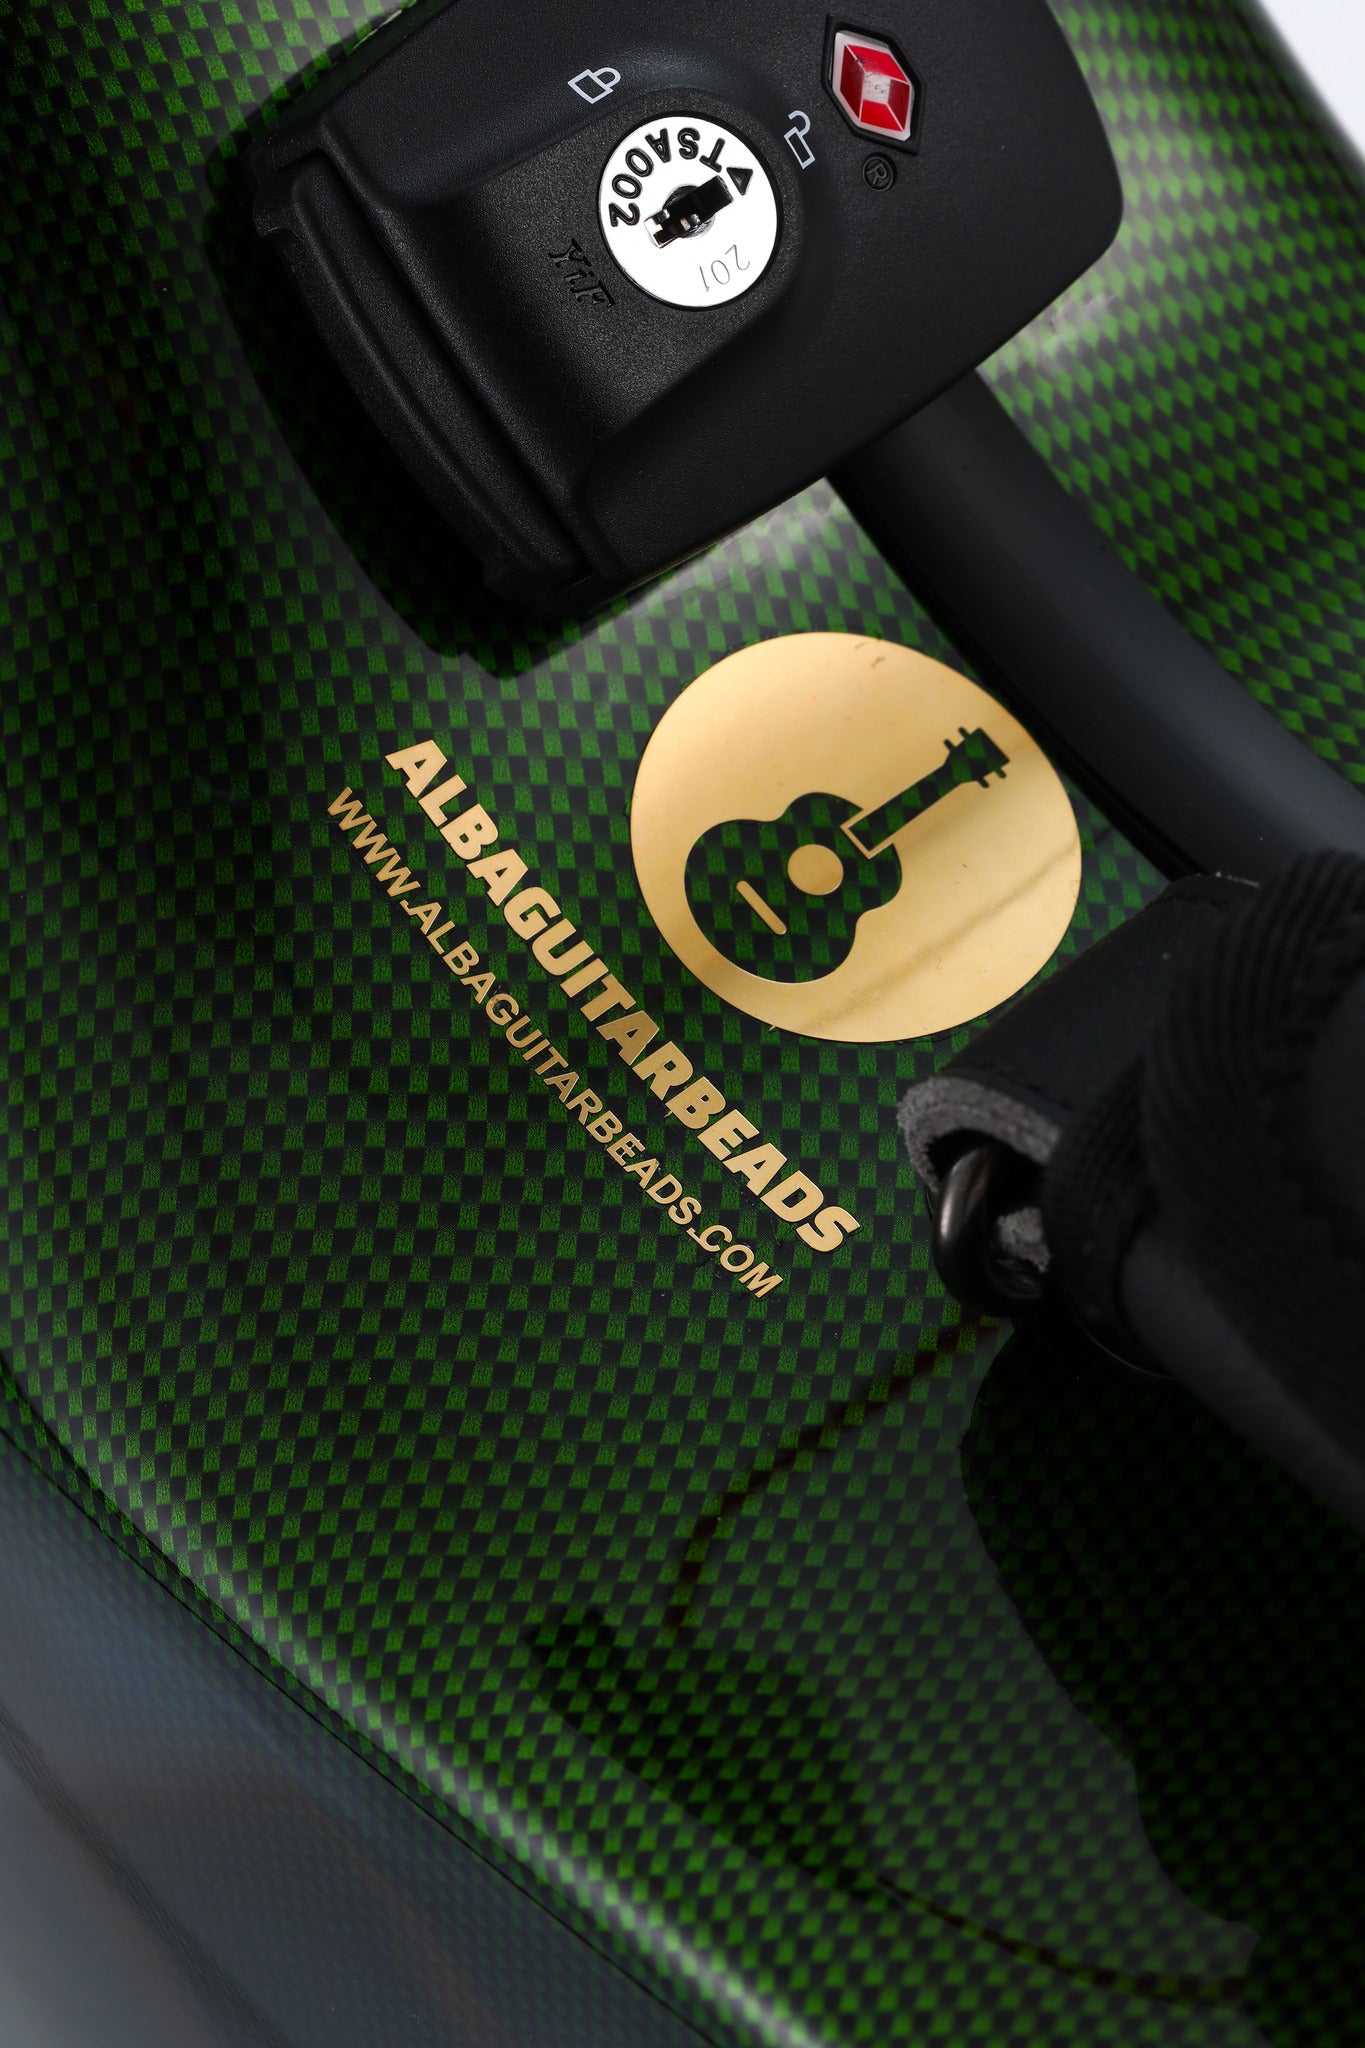 
Alba Guitar Beads Case Grüner Carbon-Muster-Glanz für klassische Gitarre, Akustikgitarre, Flamenco-Gitarrenkoffer